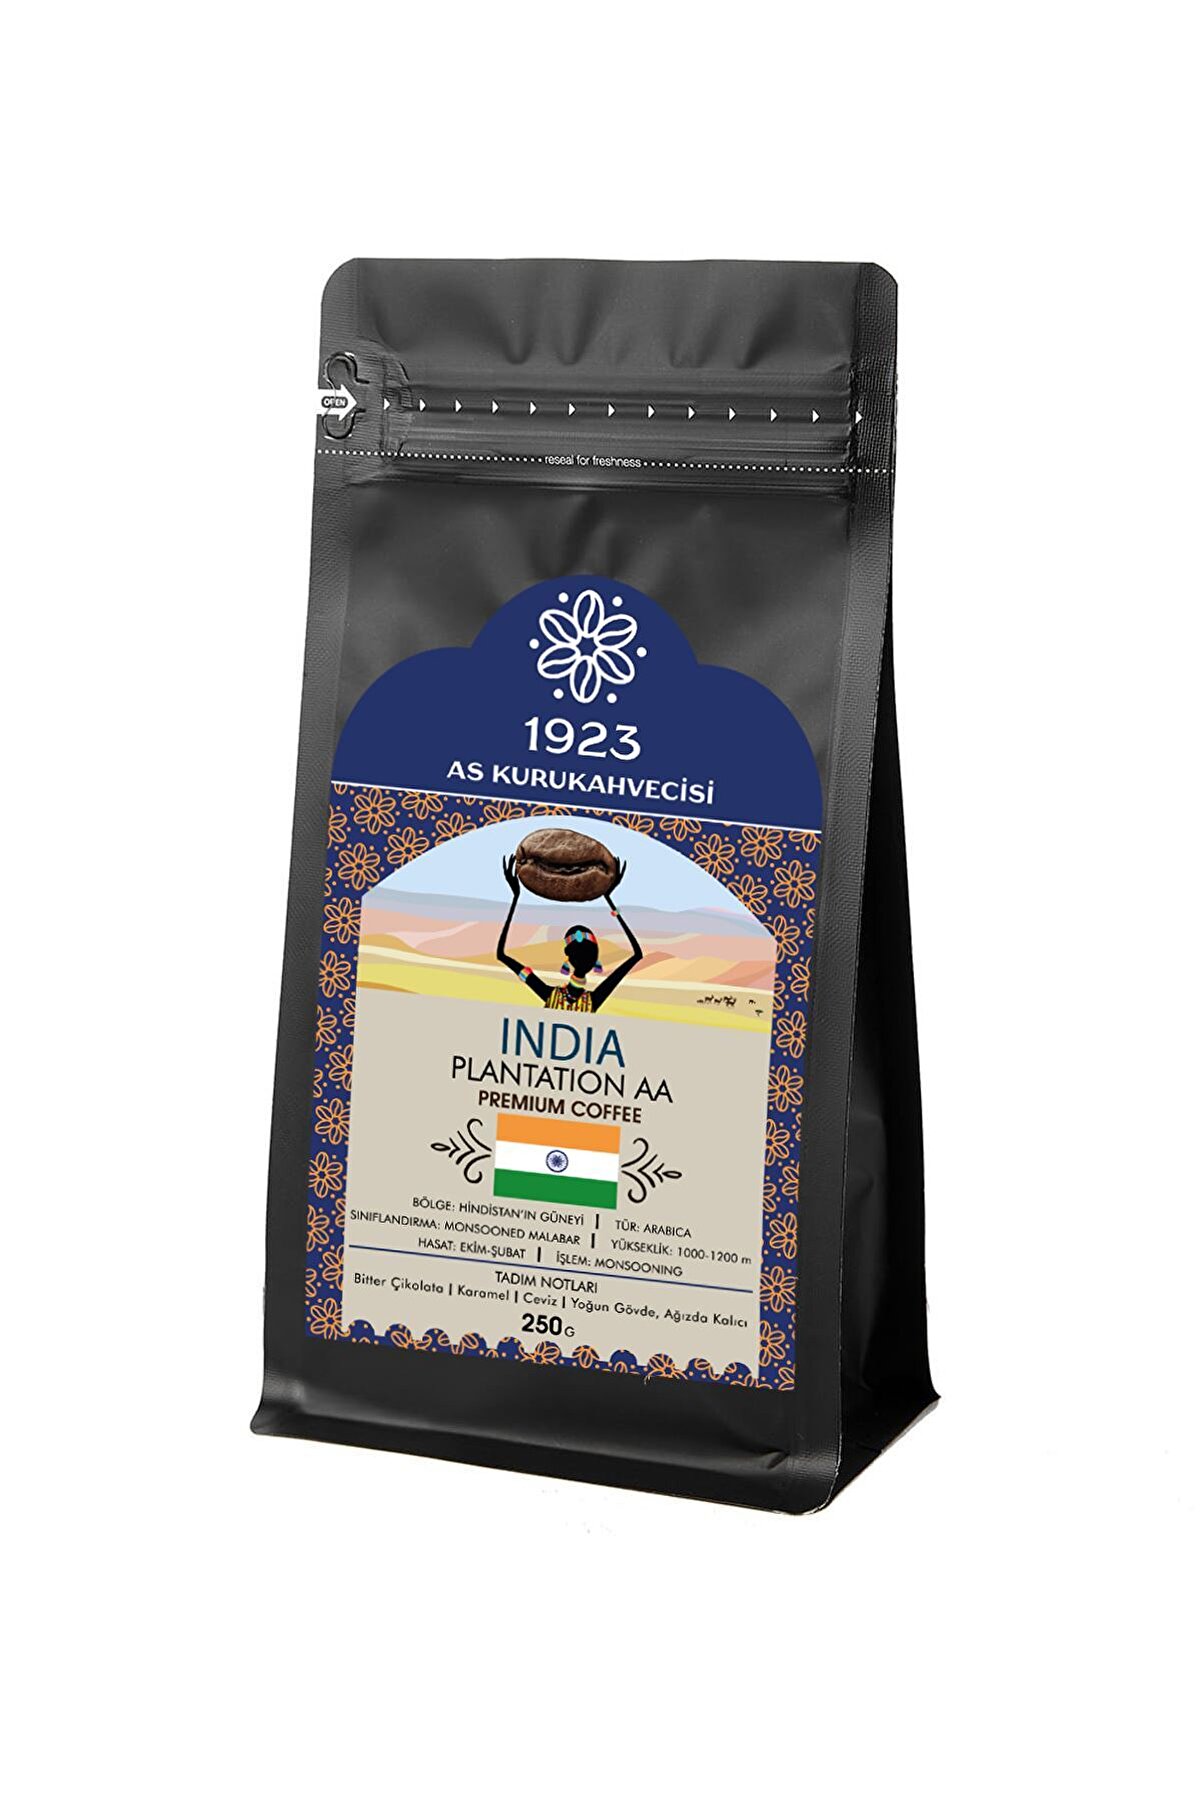 AS Kurukahvecisi India Plantation Aa Filtre Kahve 250 Gr.